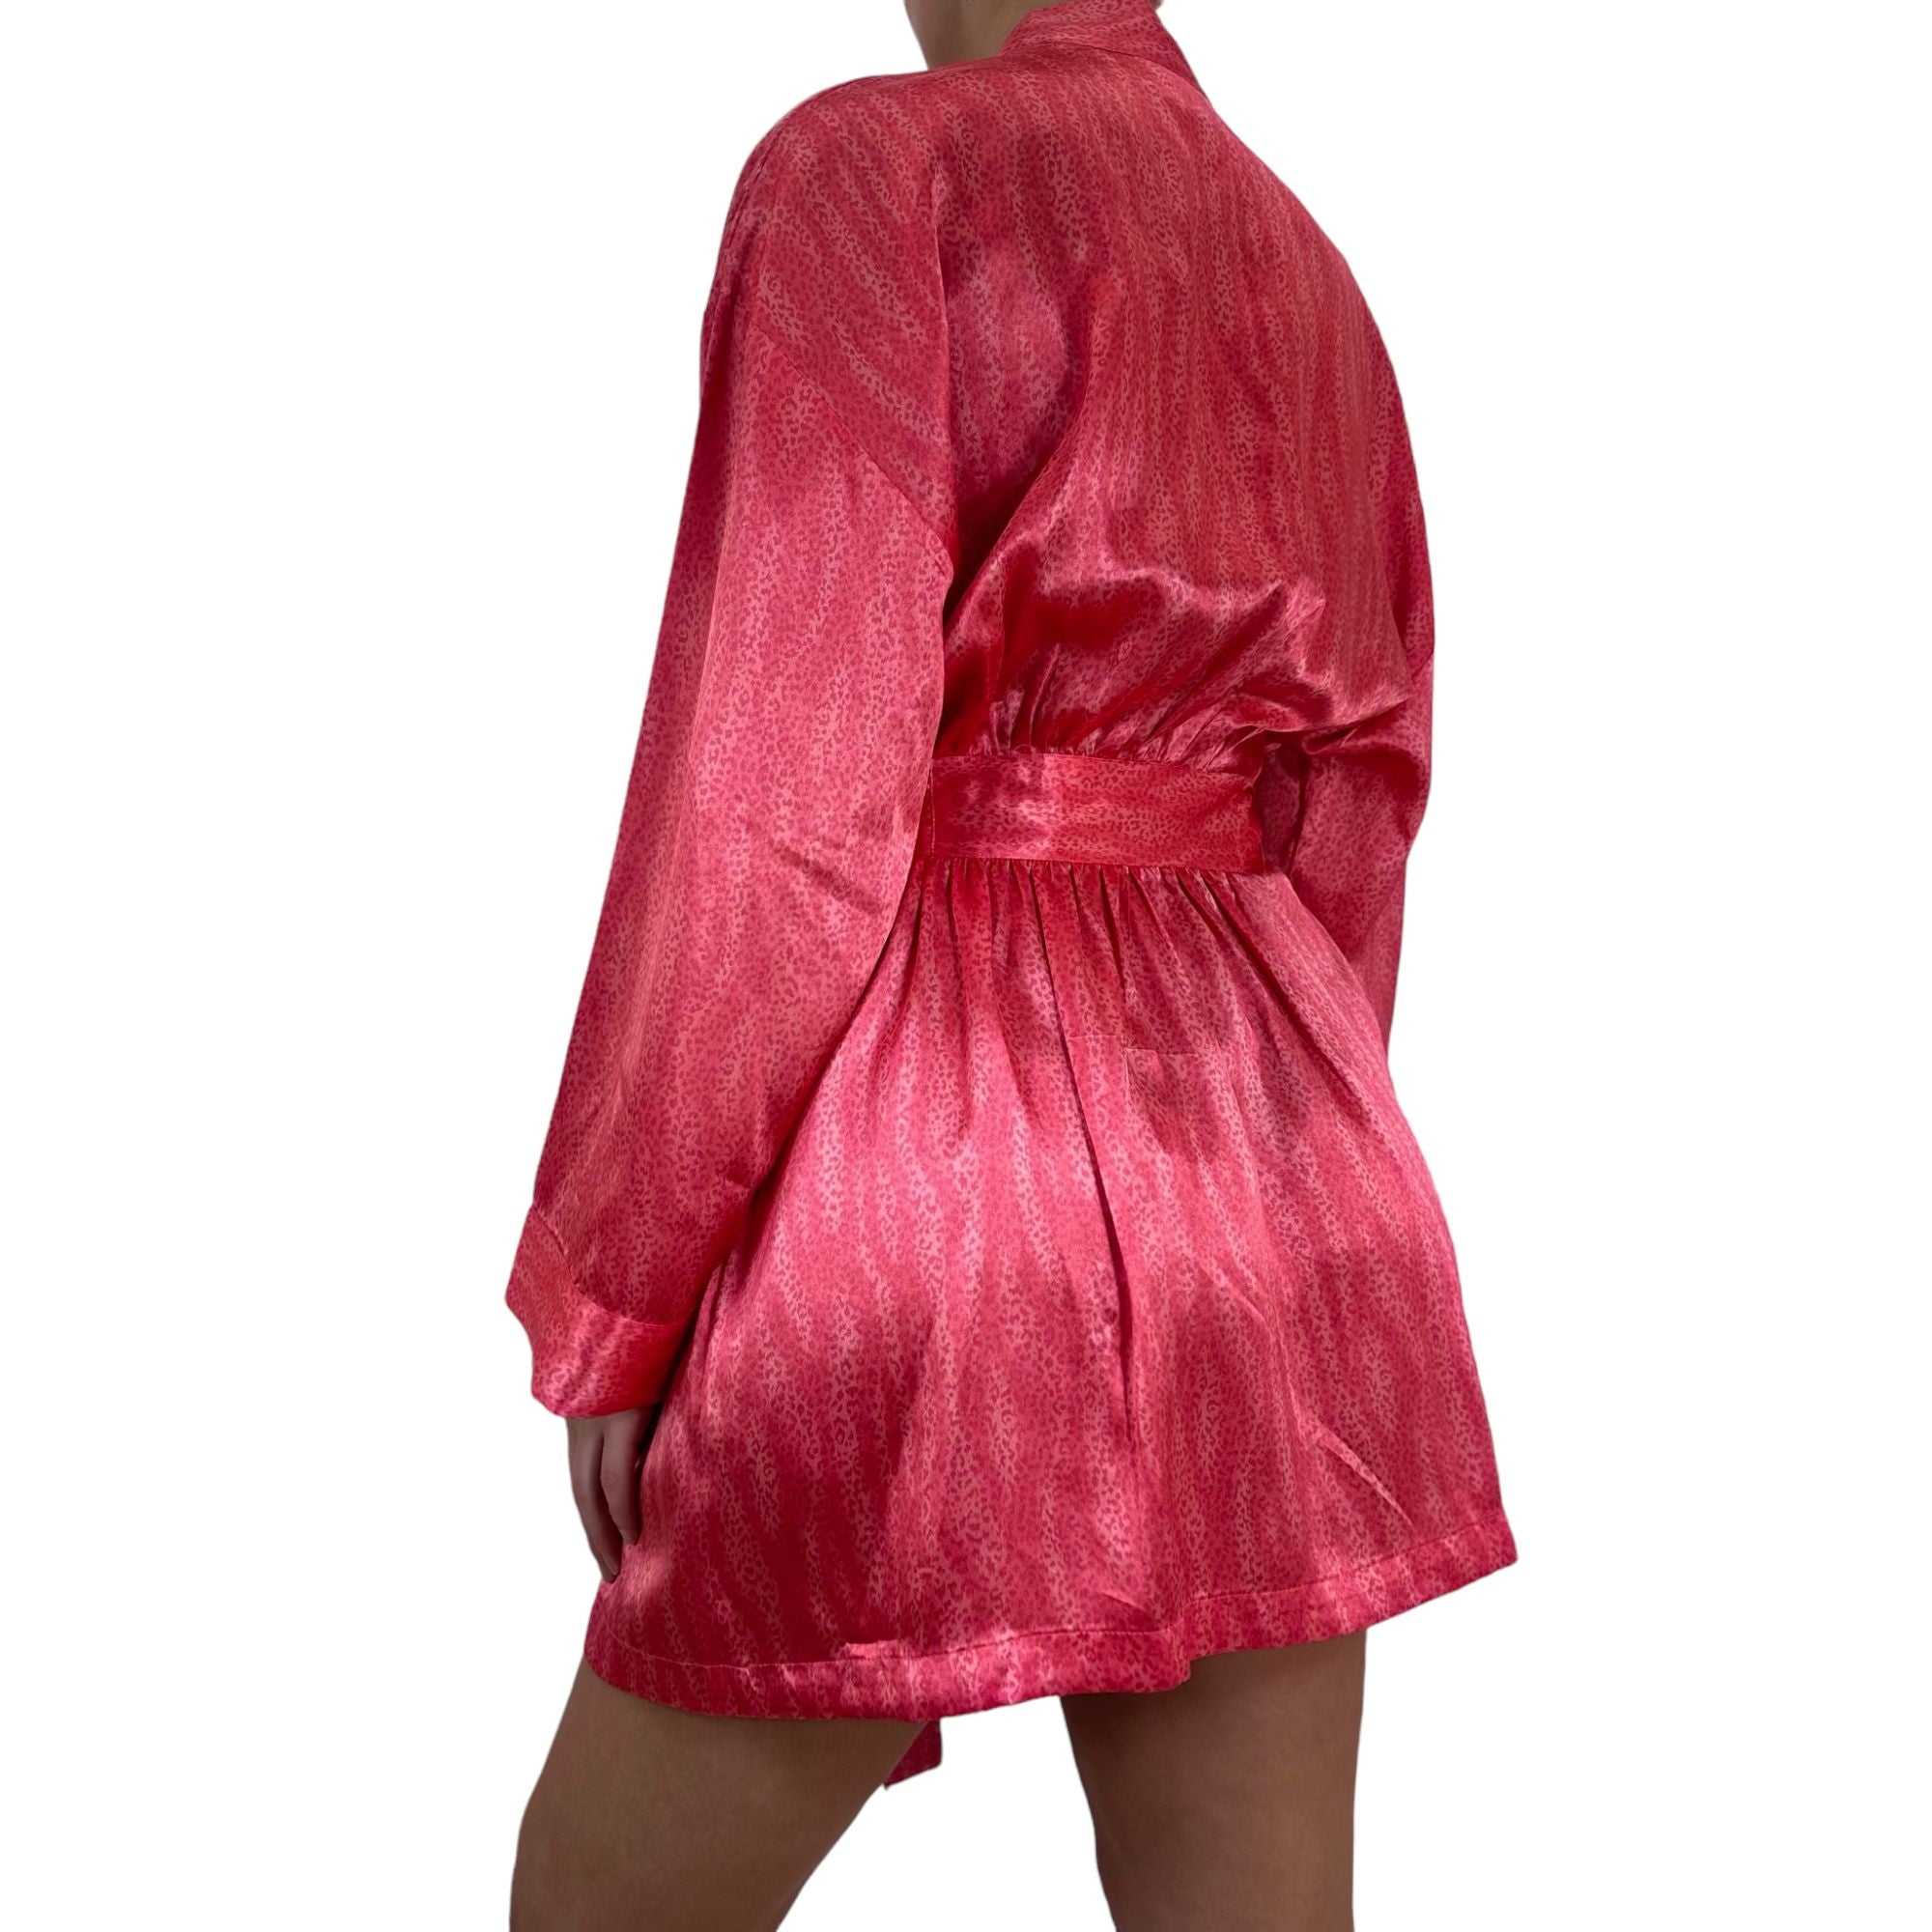 Y2k Vintage Victoria's Secret Cheetah Print Pink Satin Robe [S-L]